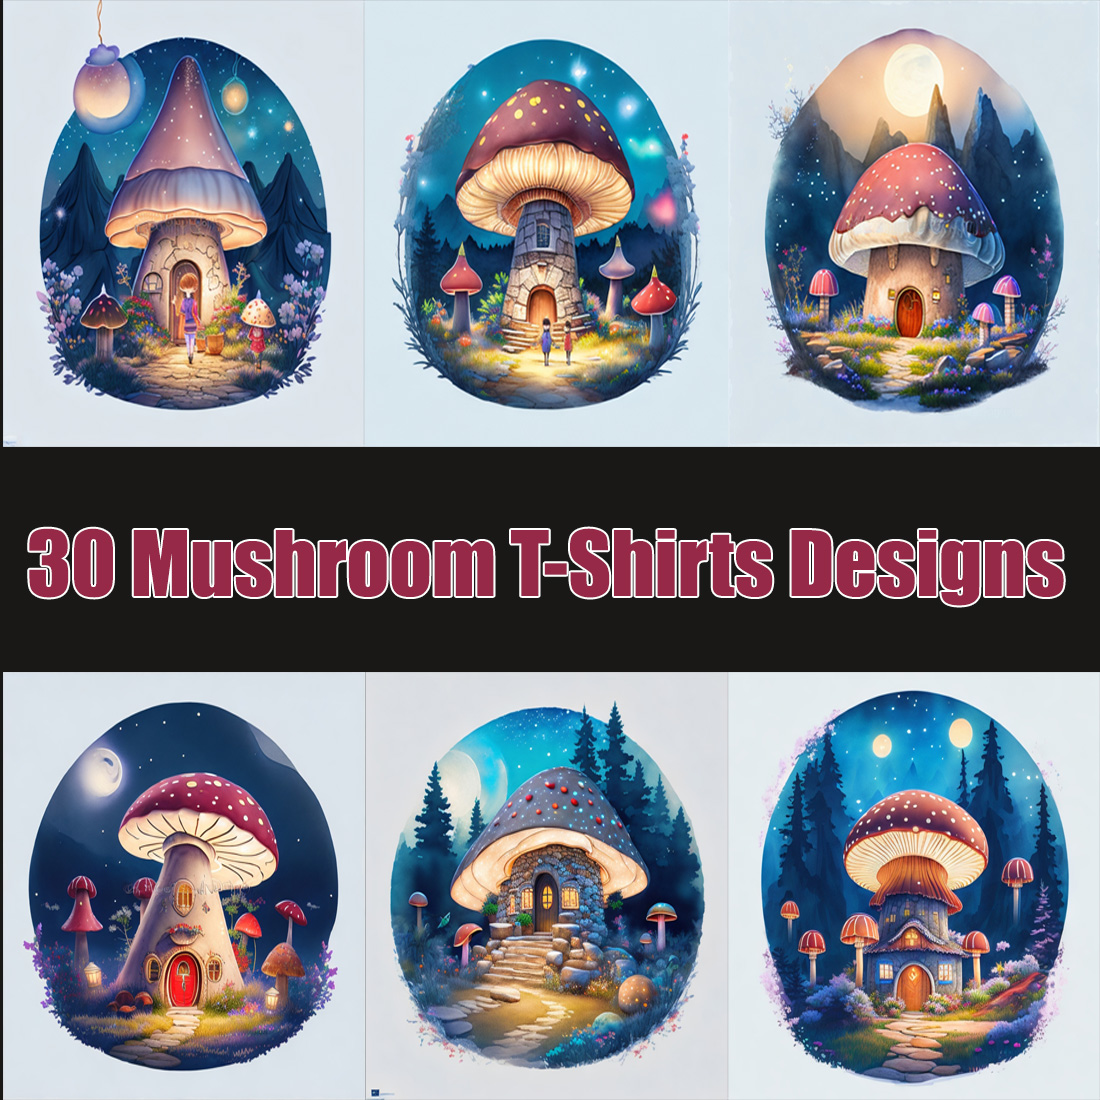 30 Mushroom T-Shirts Designs cover image.